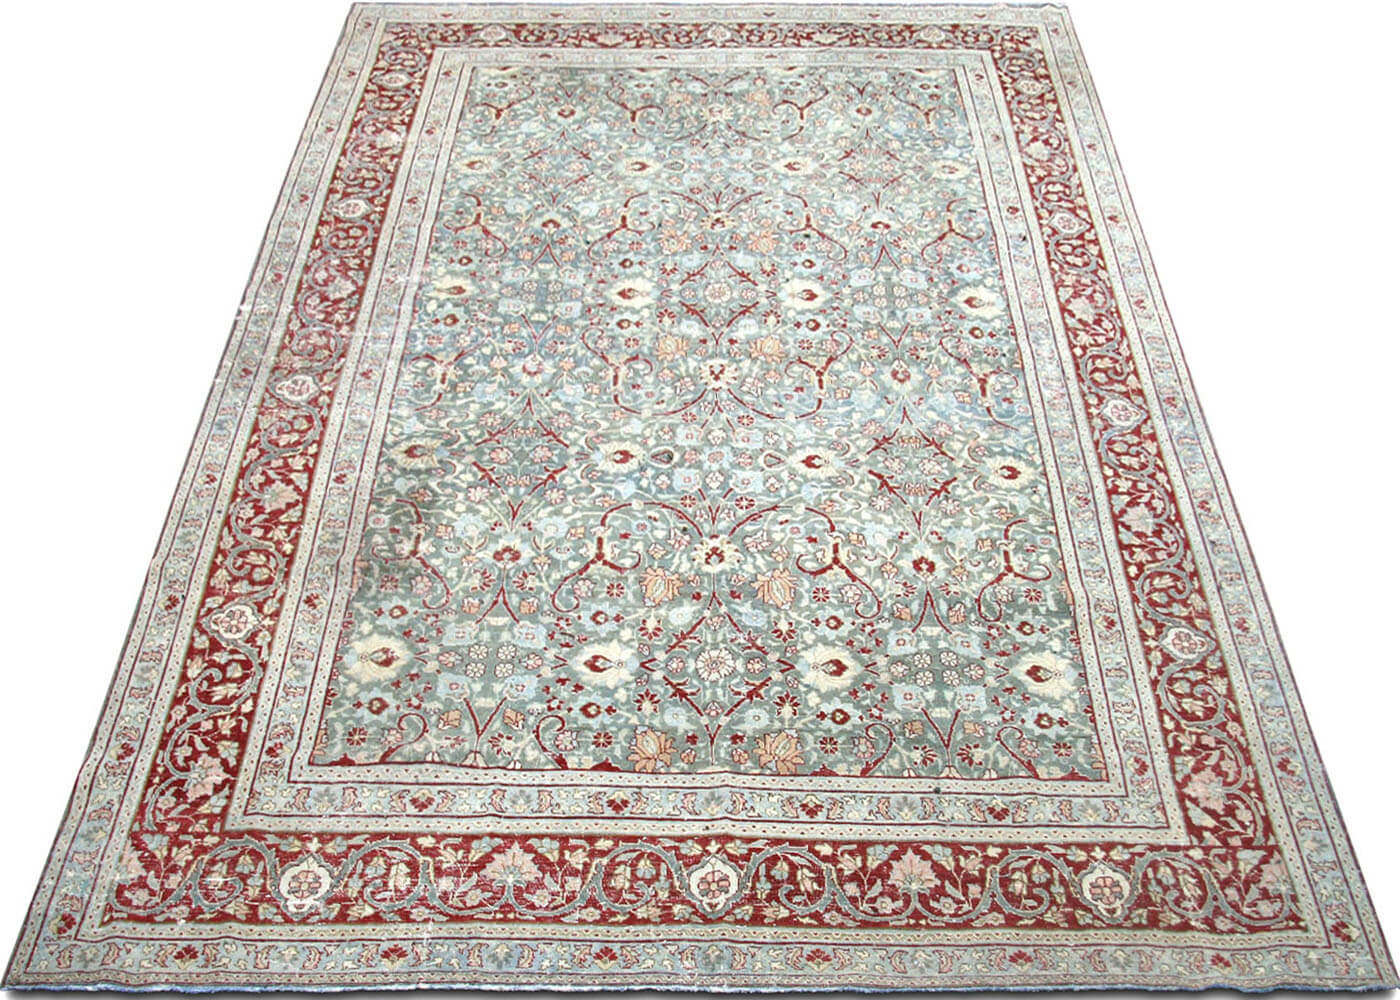 Semi Antique Persian Tabriz Rug - 10' x 14'9"